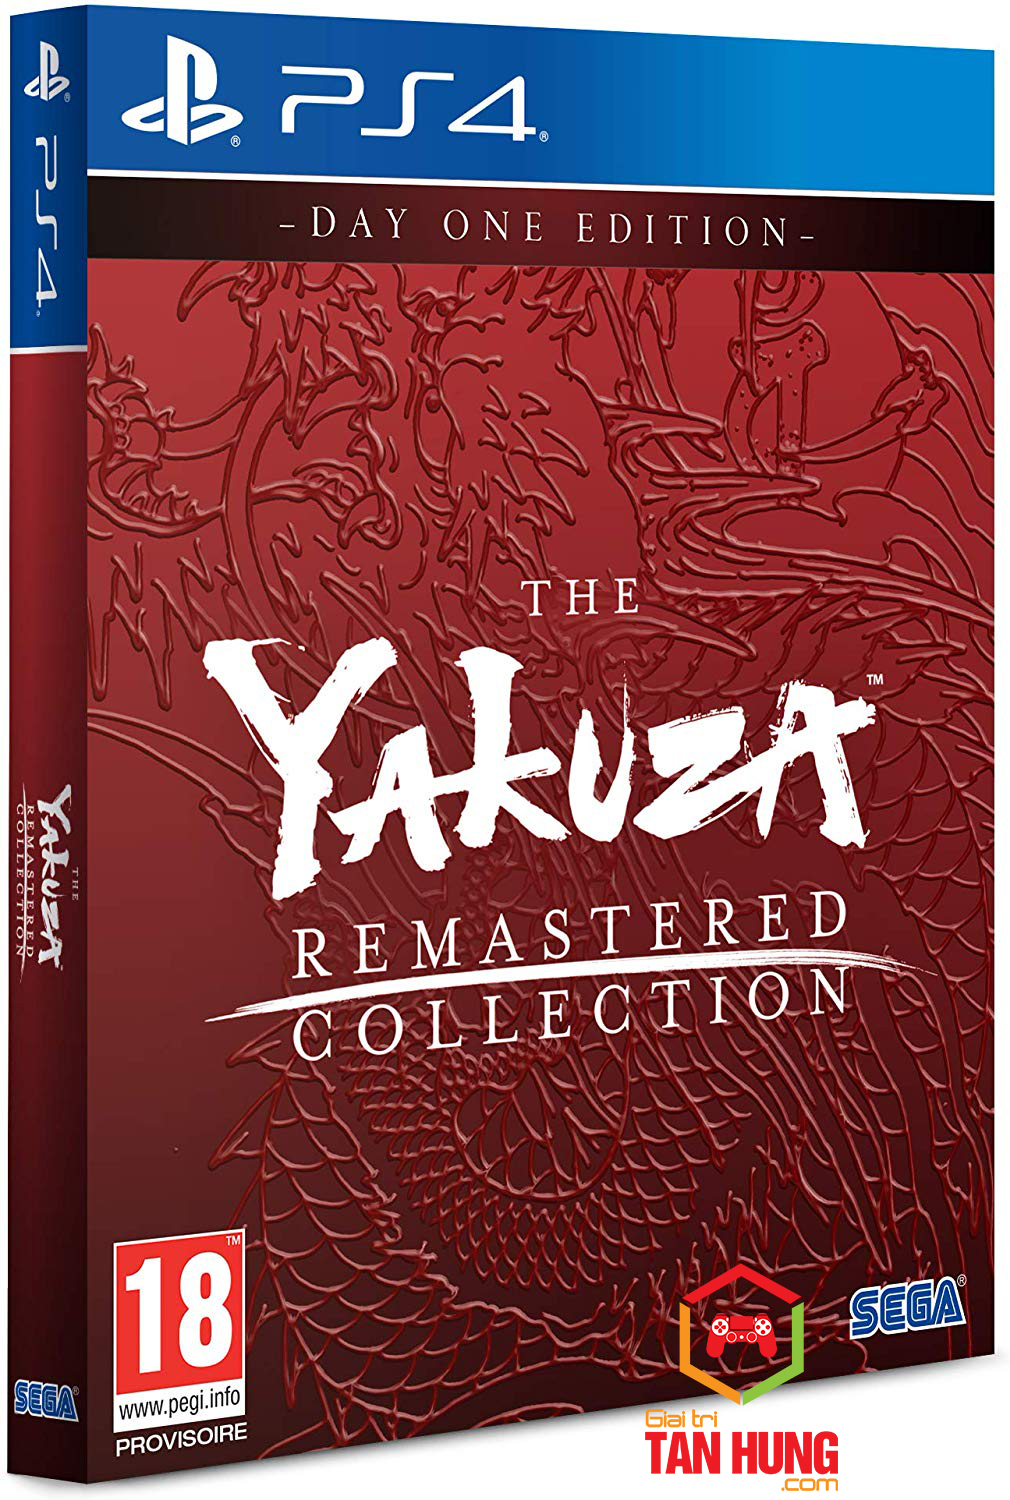 Đĩa Game Ps4 The Yakuza Remastered Collection